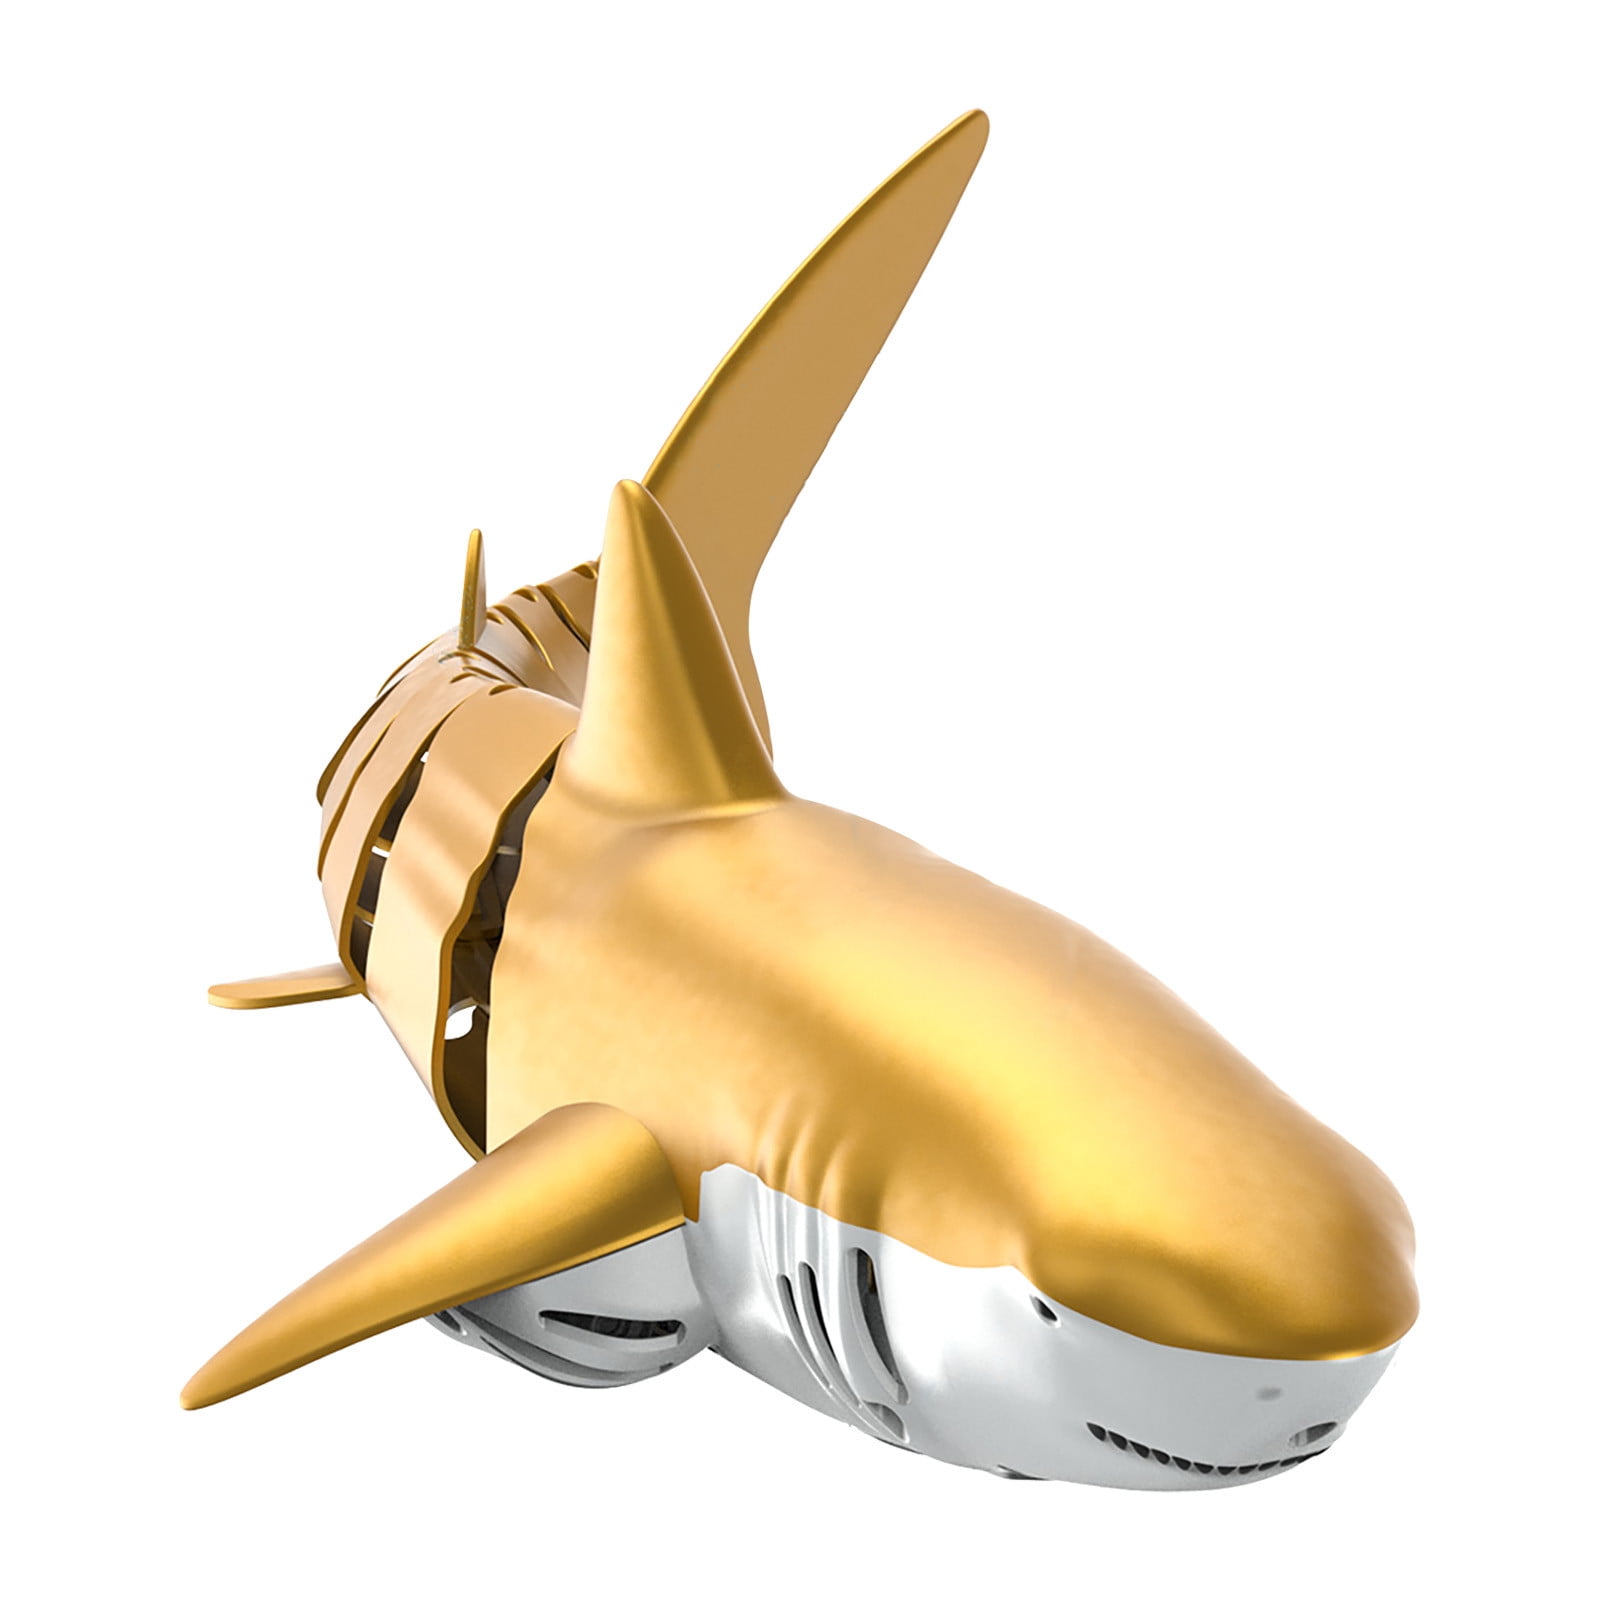 Lifelike Shark Shaped Toy Animal For Kids Model New H0O5 